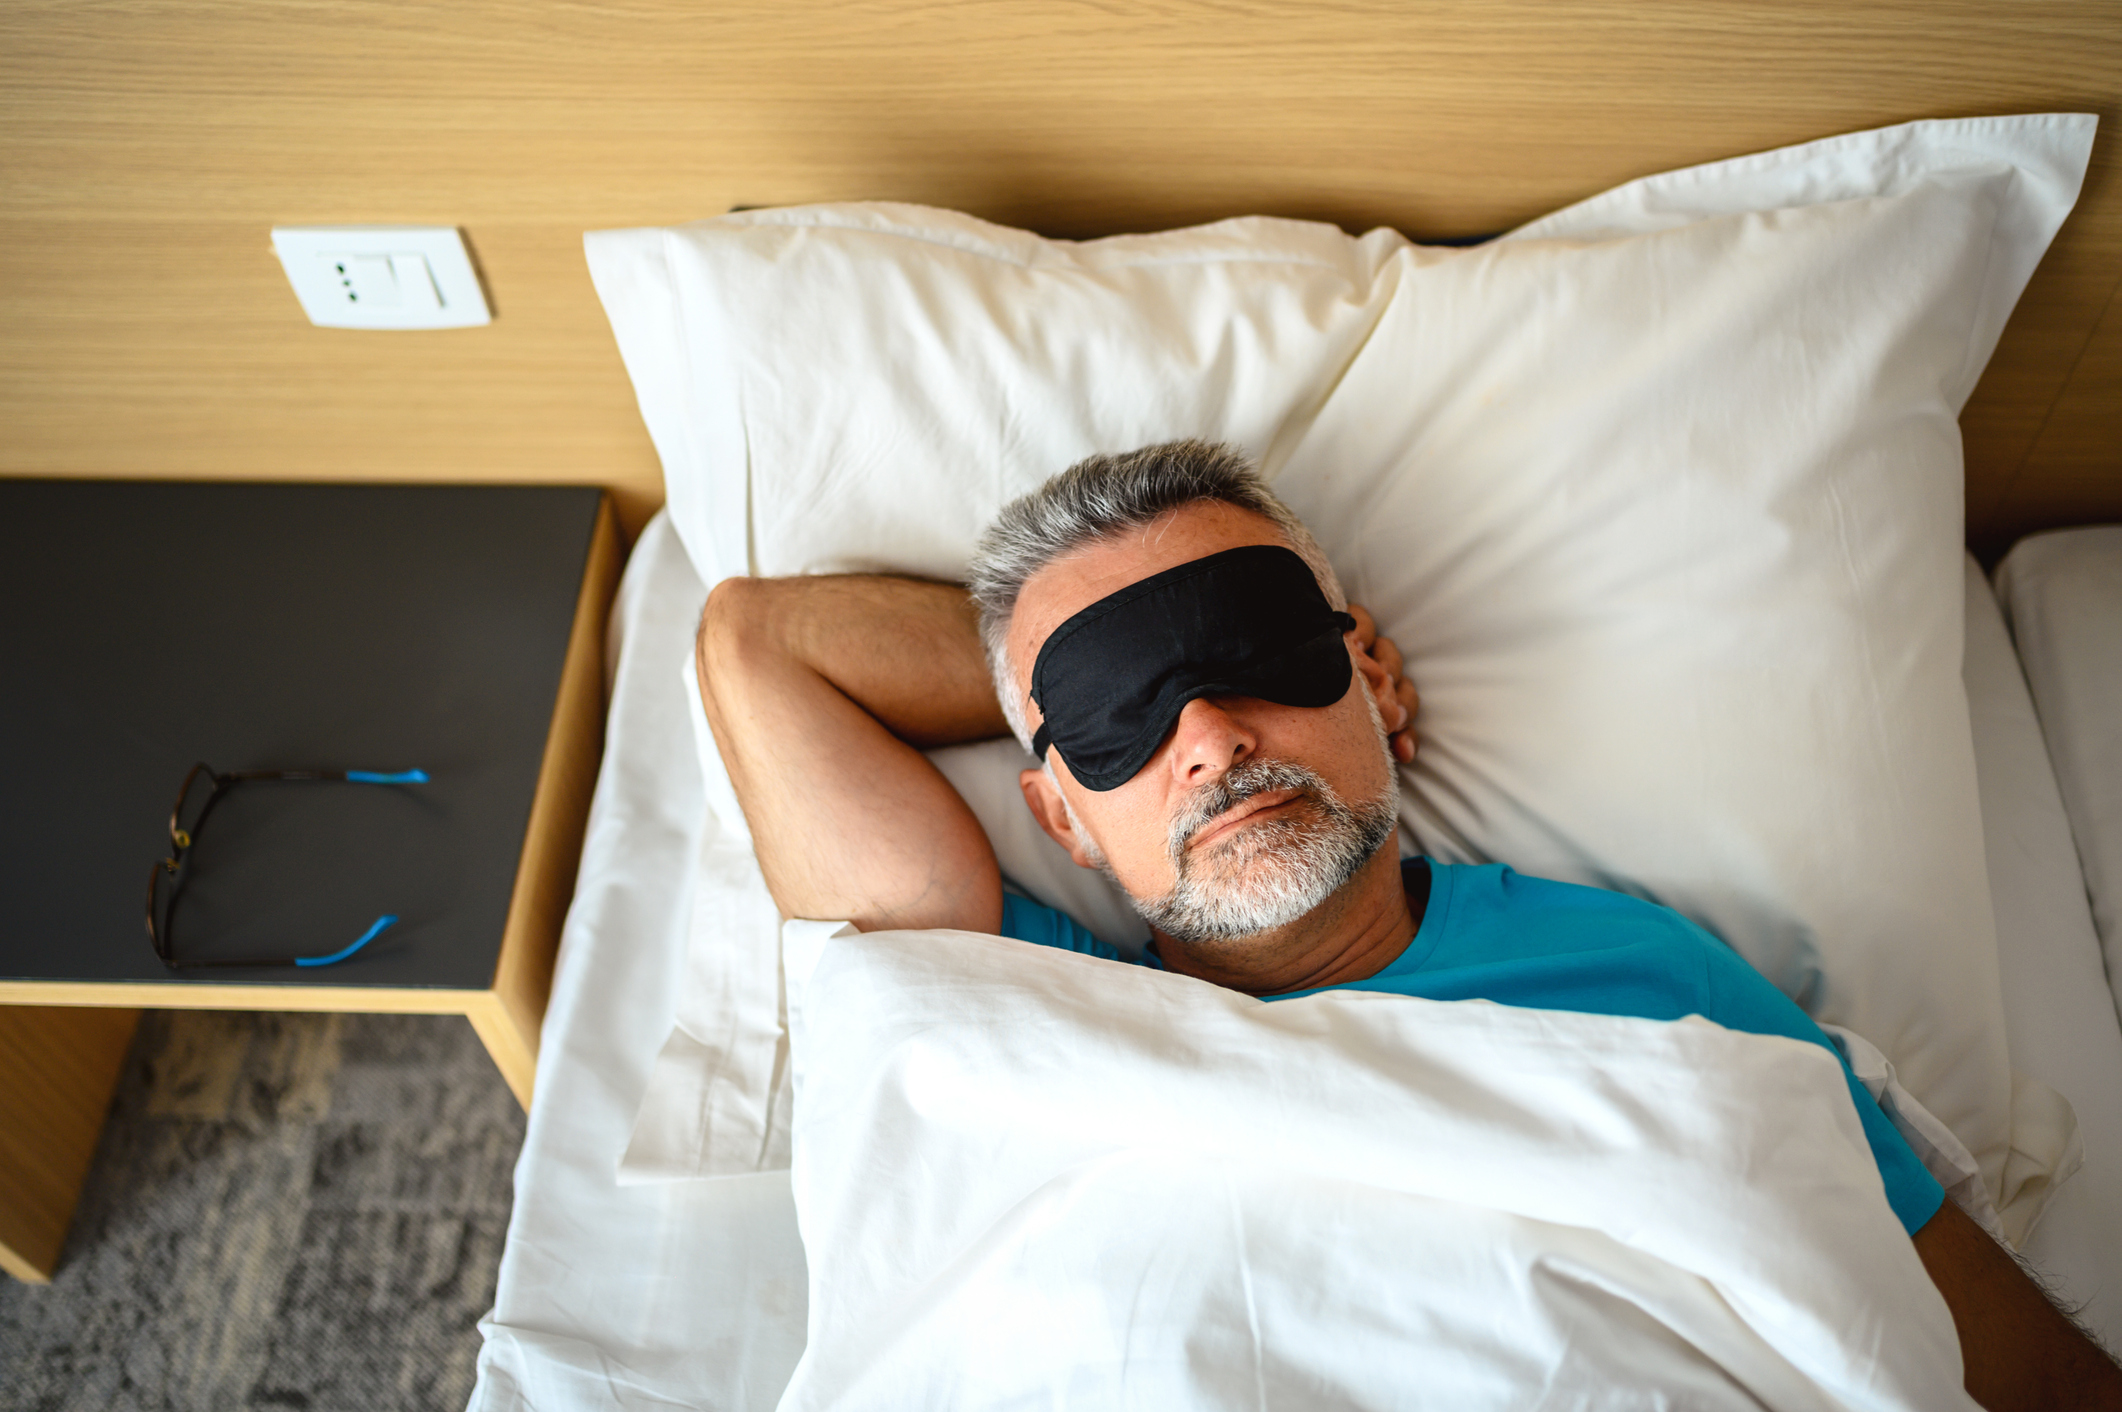 The sleep habit that calcifies your arteries